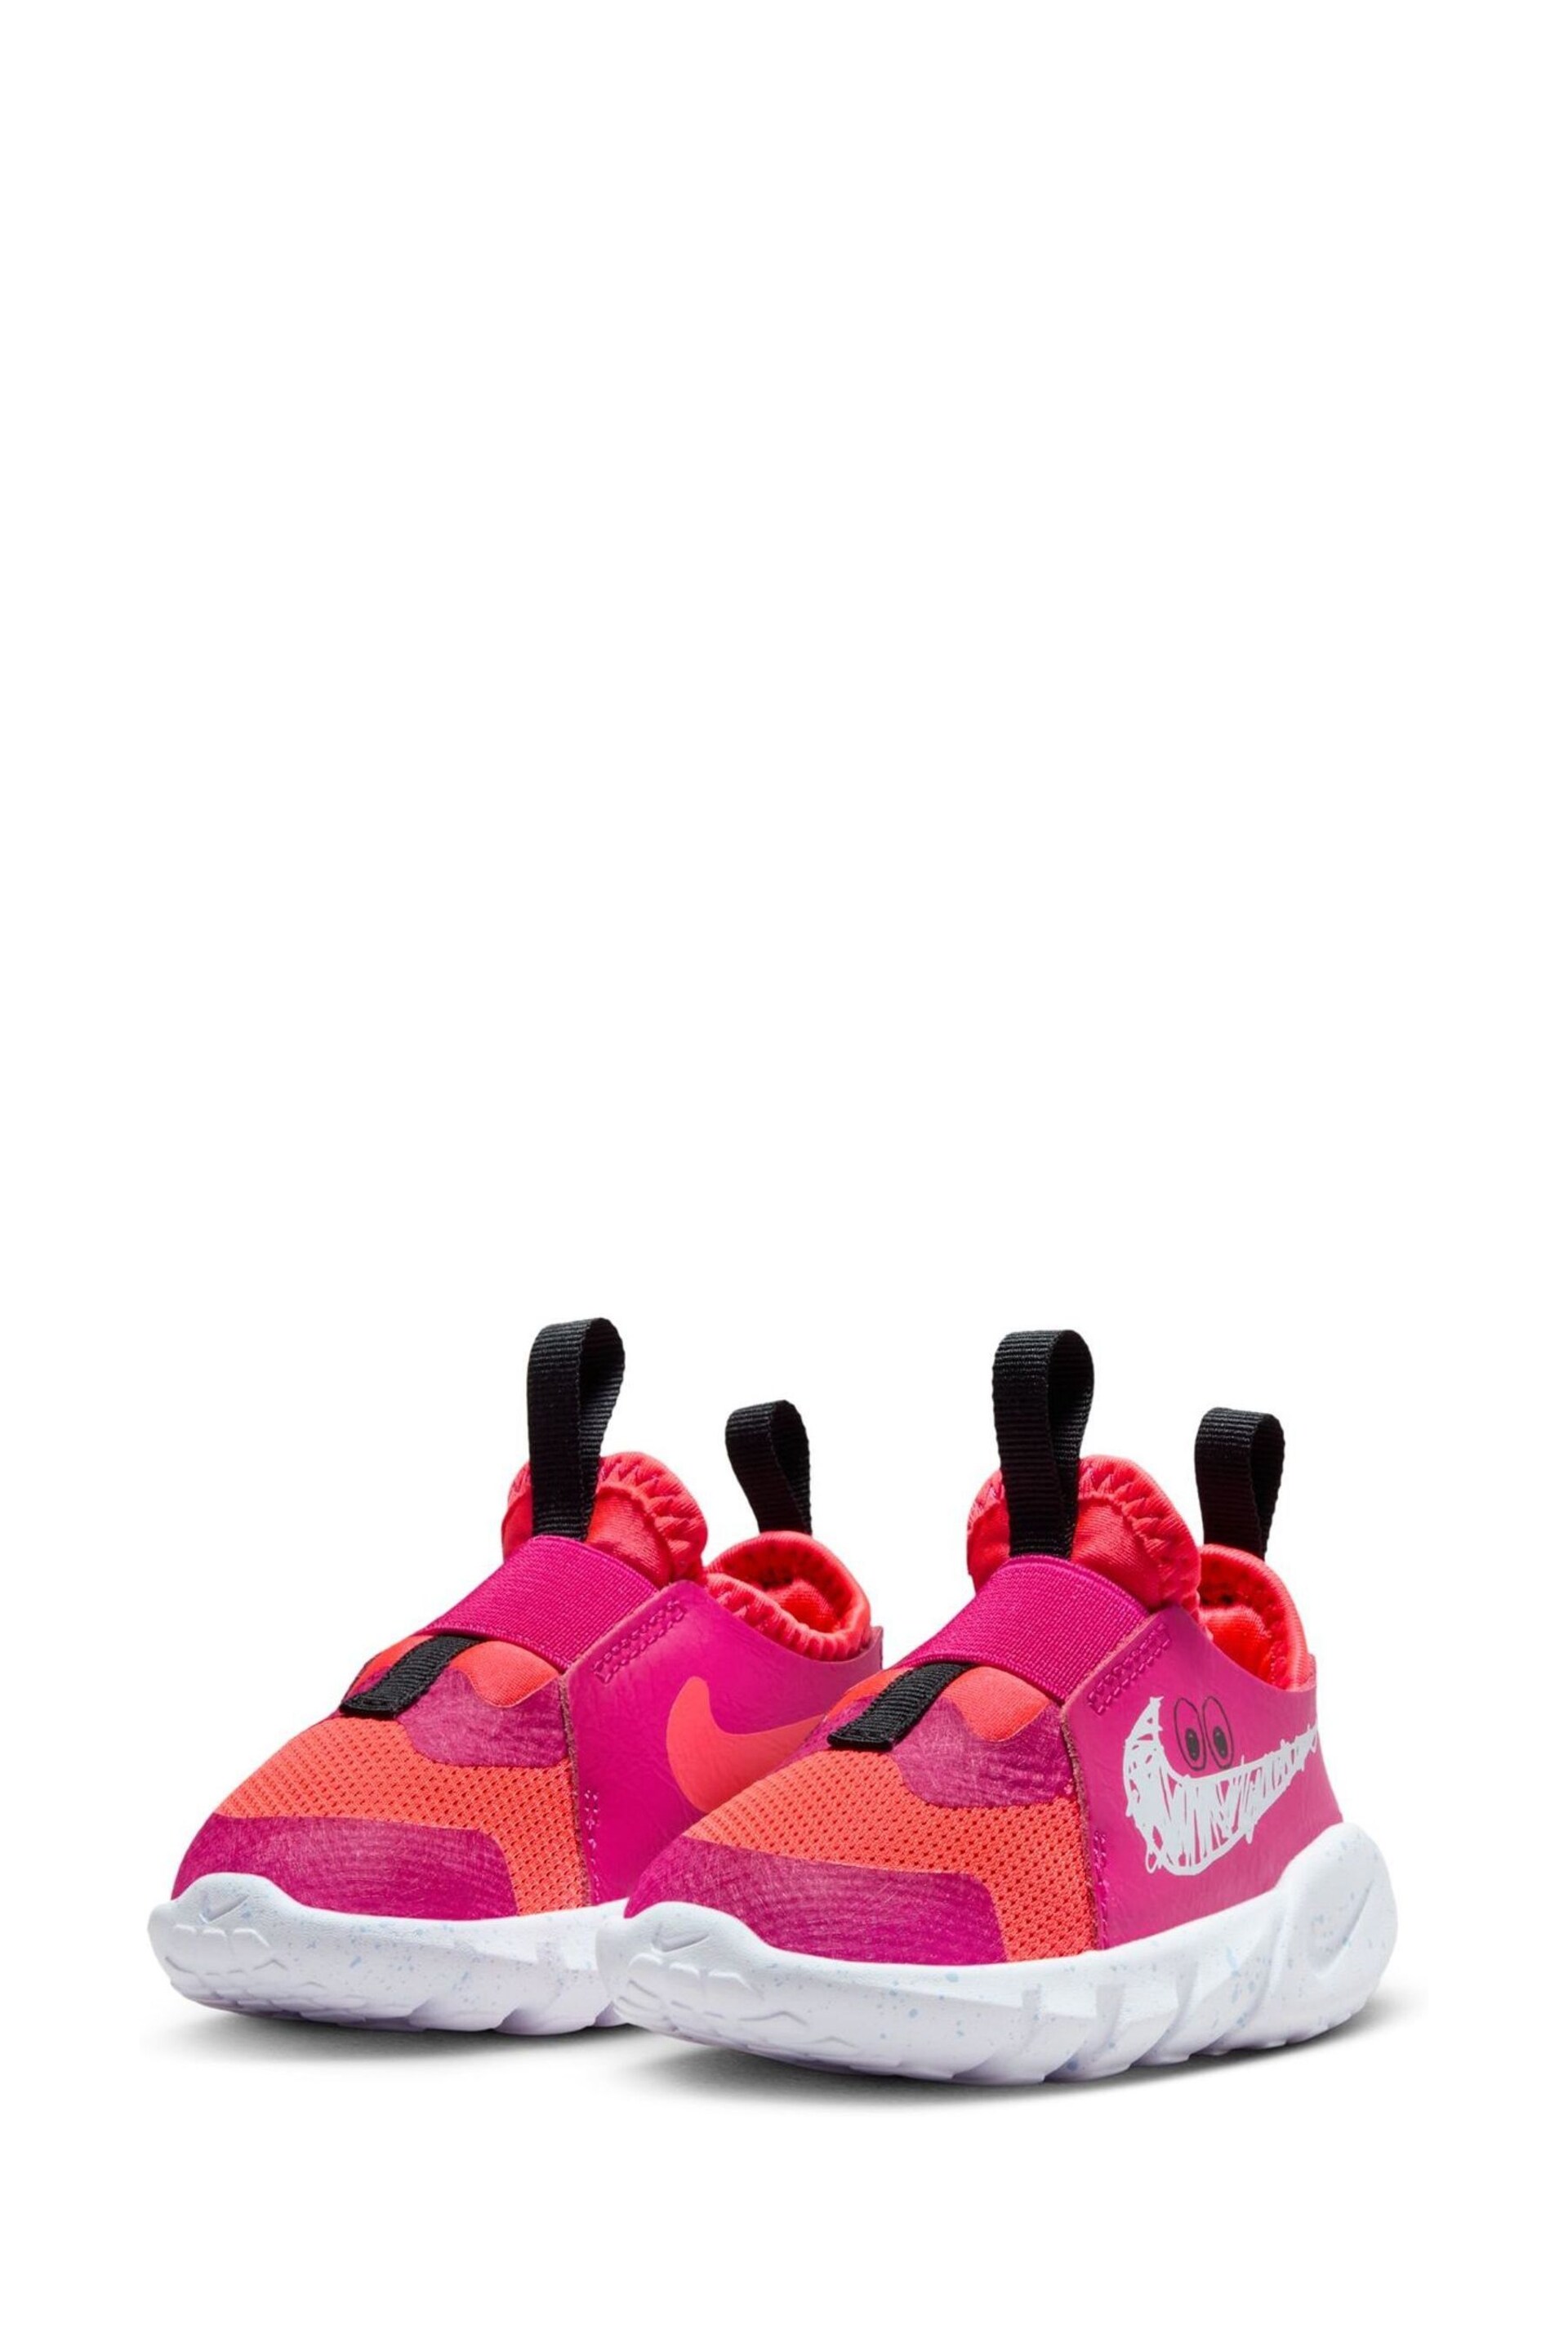 Nike Crimson Pink Flex Runner 2 Infant Trainers - Image 6 of 11